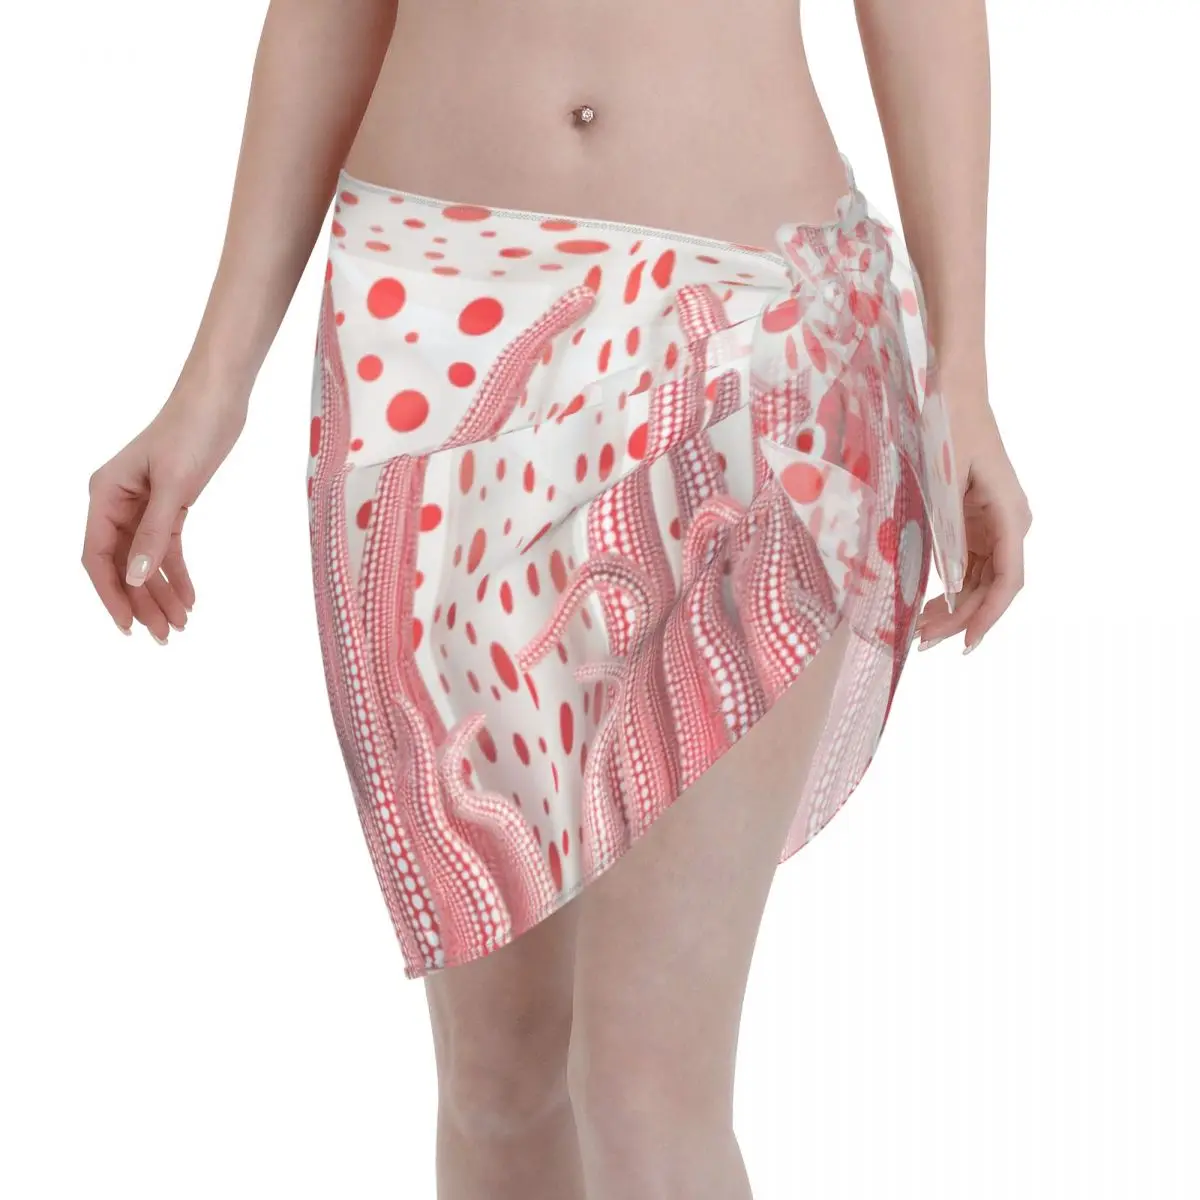 

Sexy Women Yayoi Kusama Painting Perspective Short Sarongs Swimsuit Coverups Art Mystery Bikinis Cover-Ups Skirts Ladies Skirt